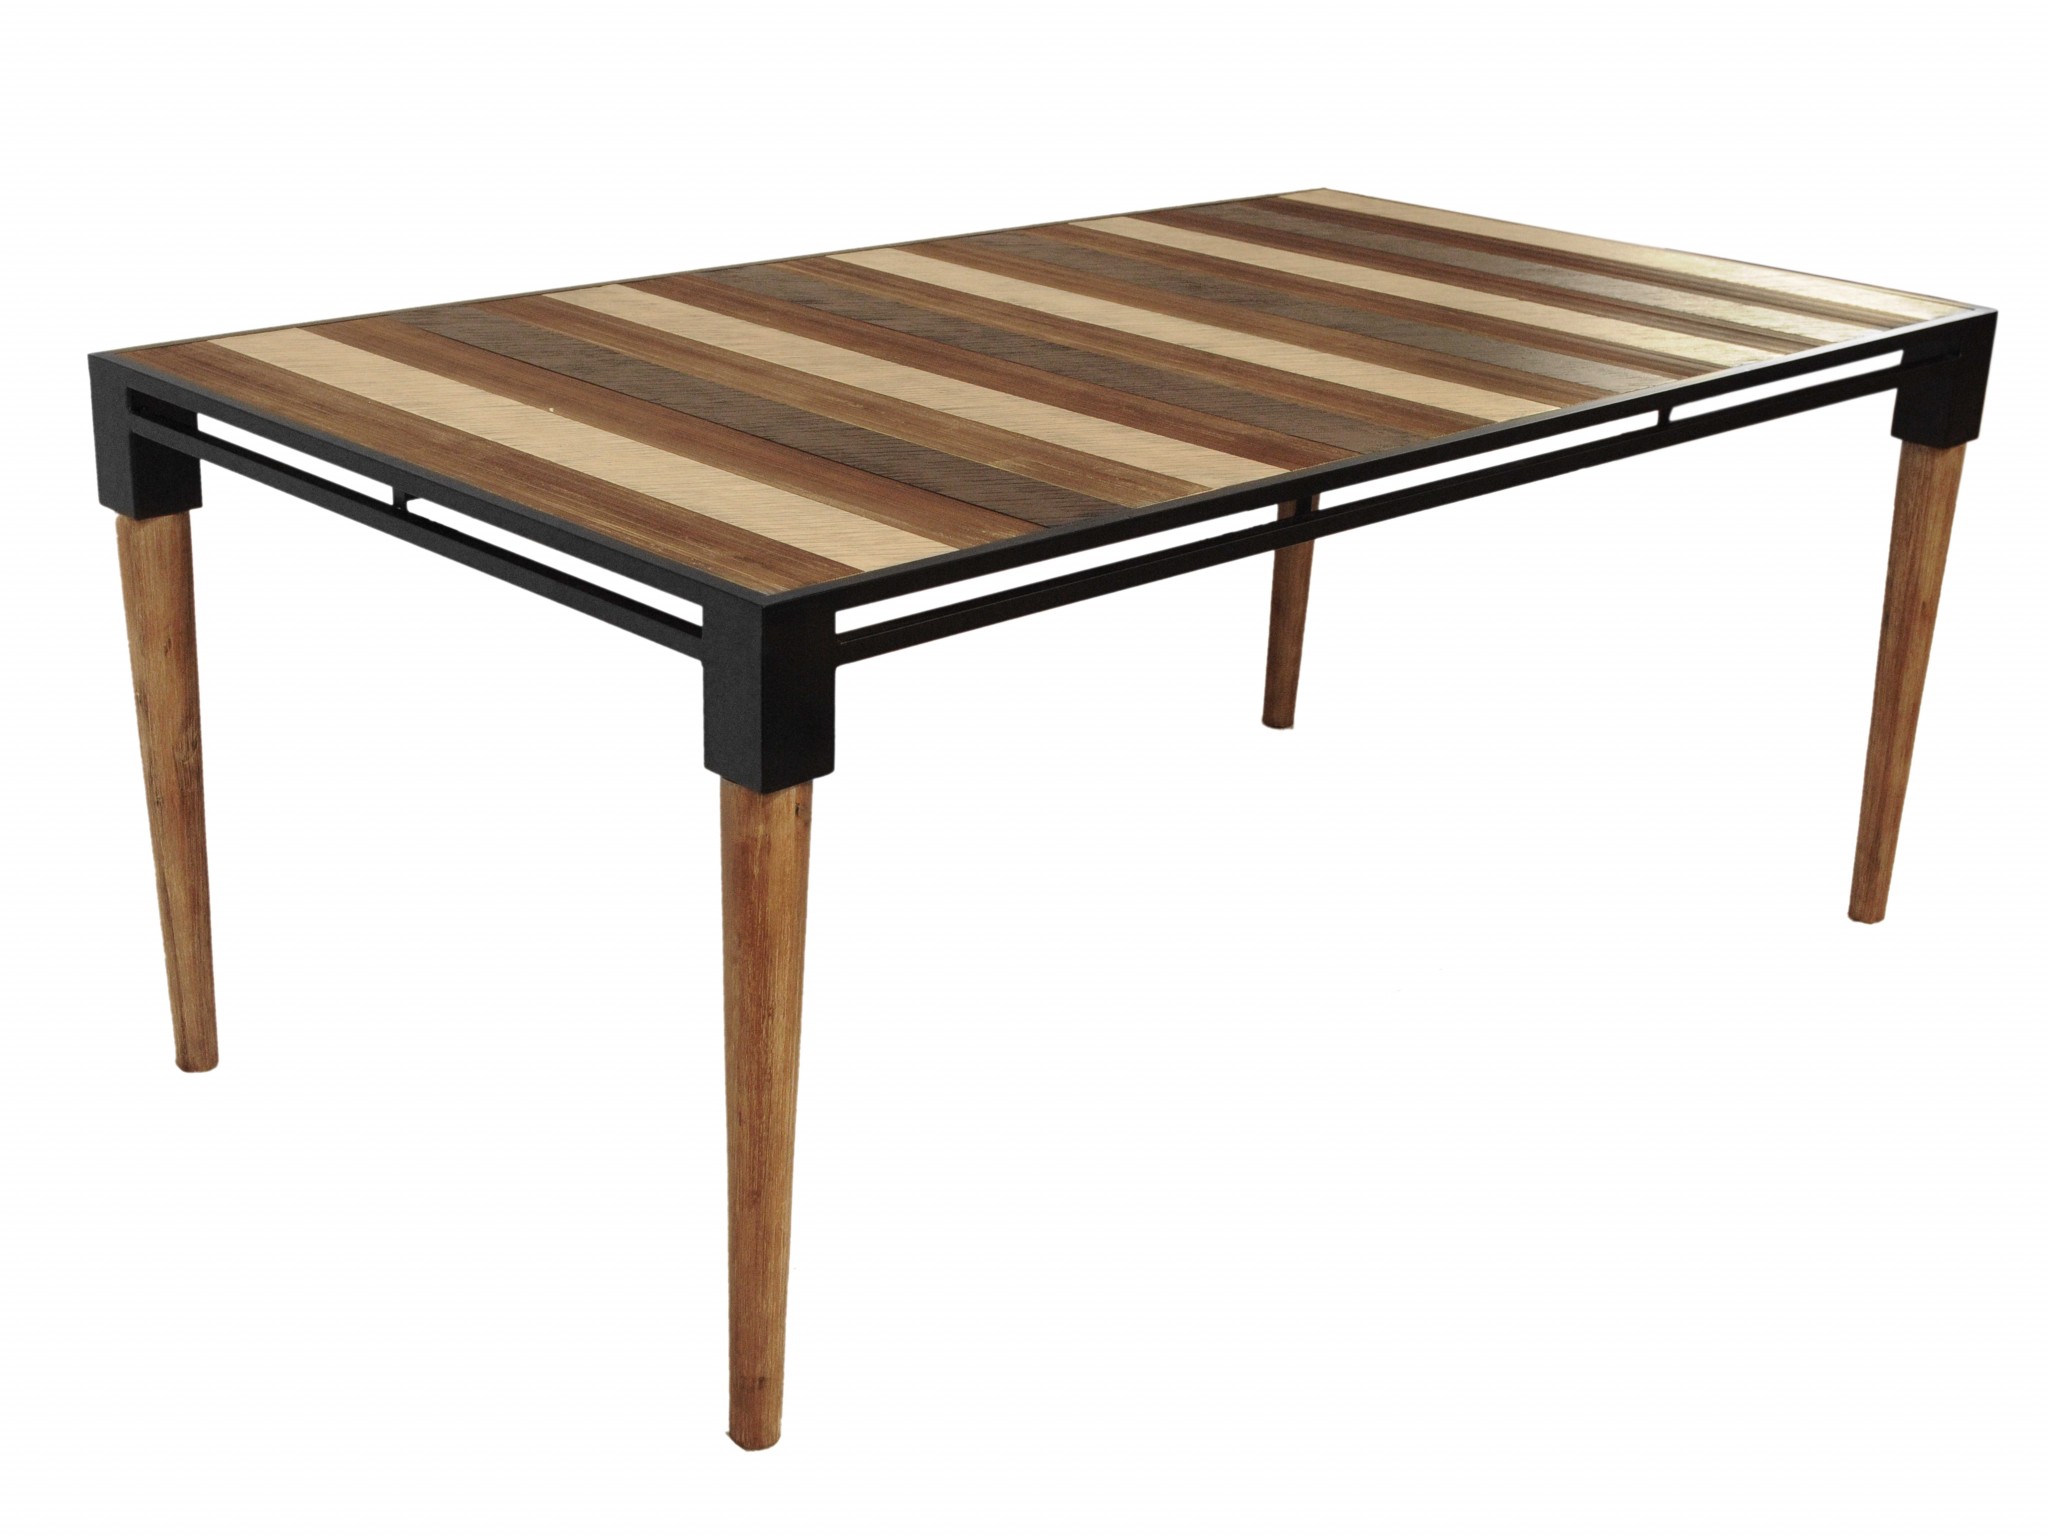 40" X 74" X 30" Metal Base Acacia Wood Dining Table